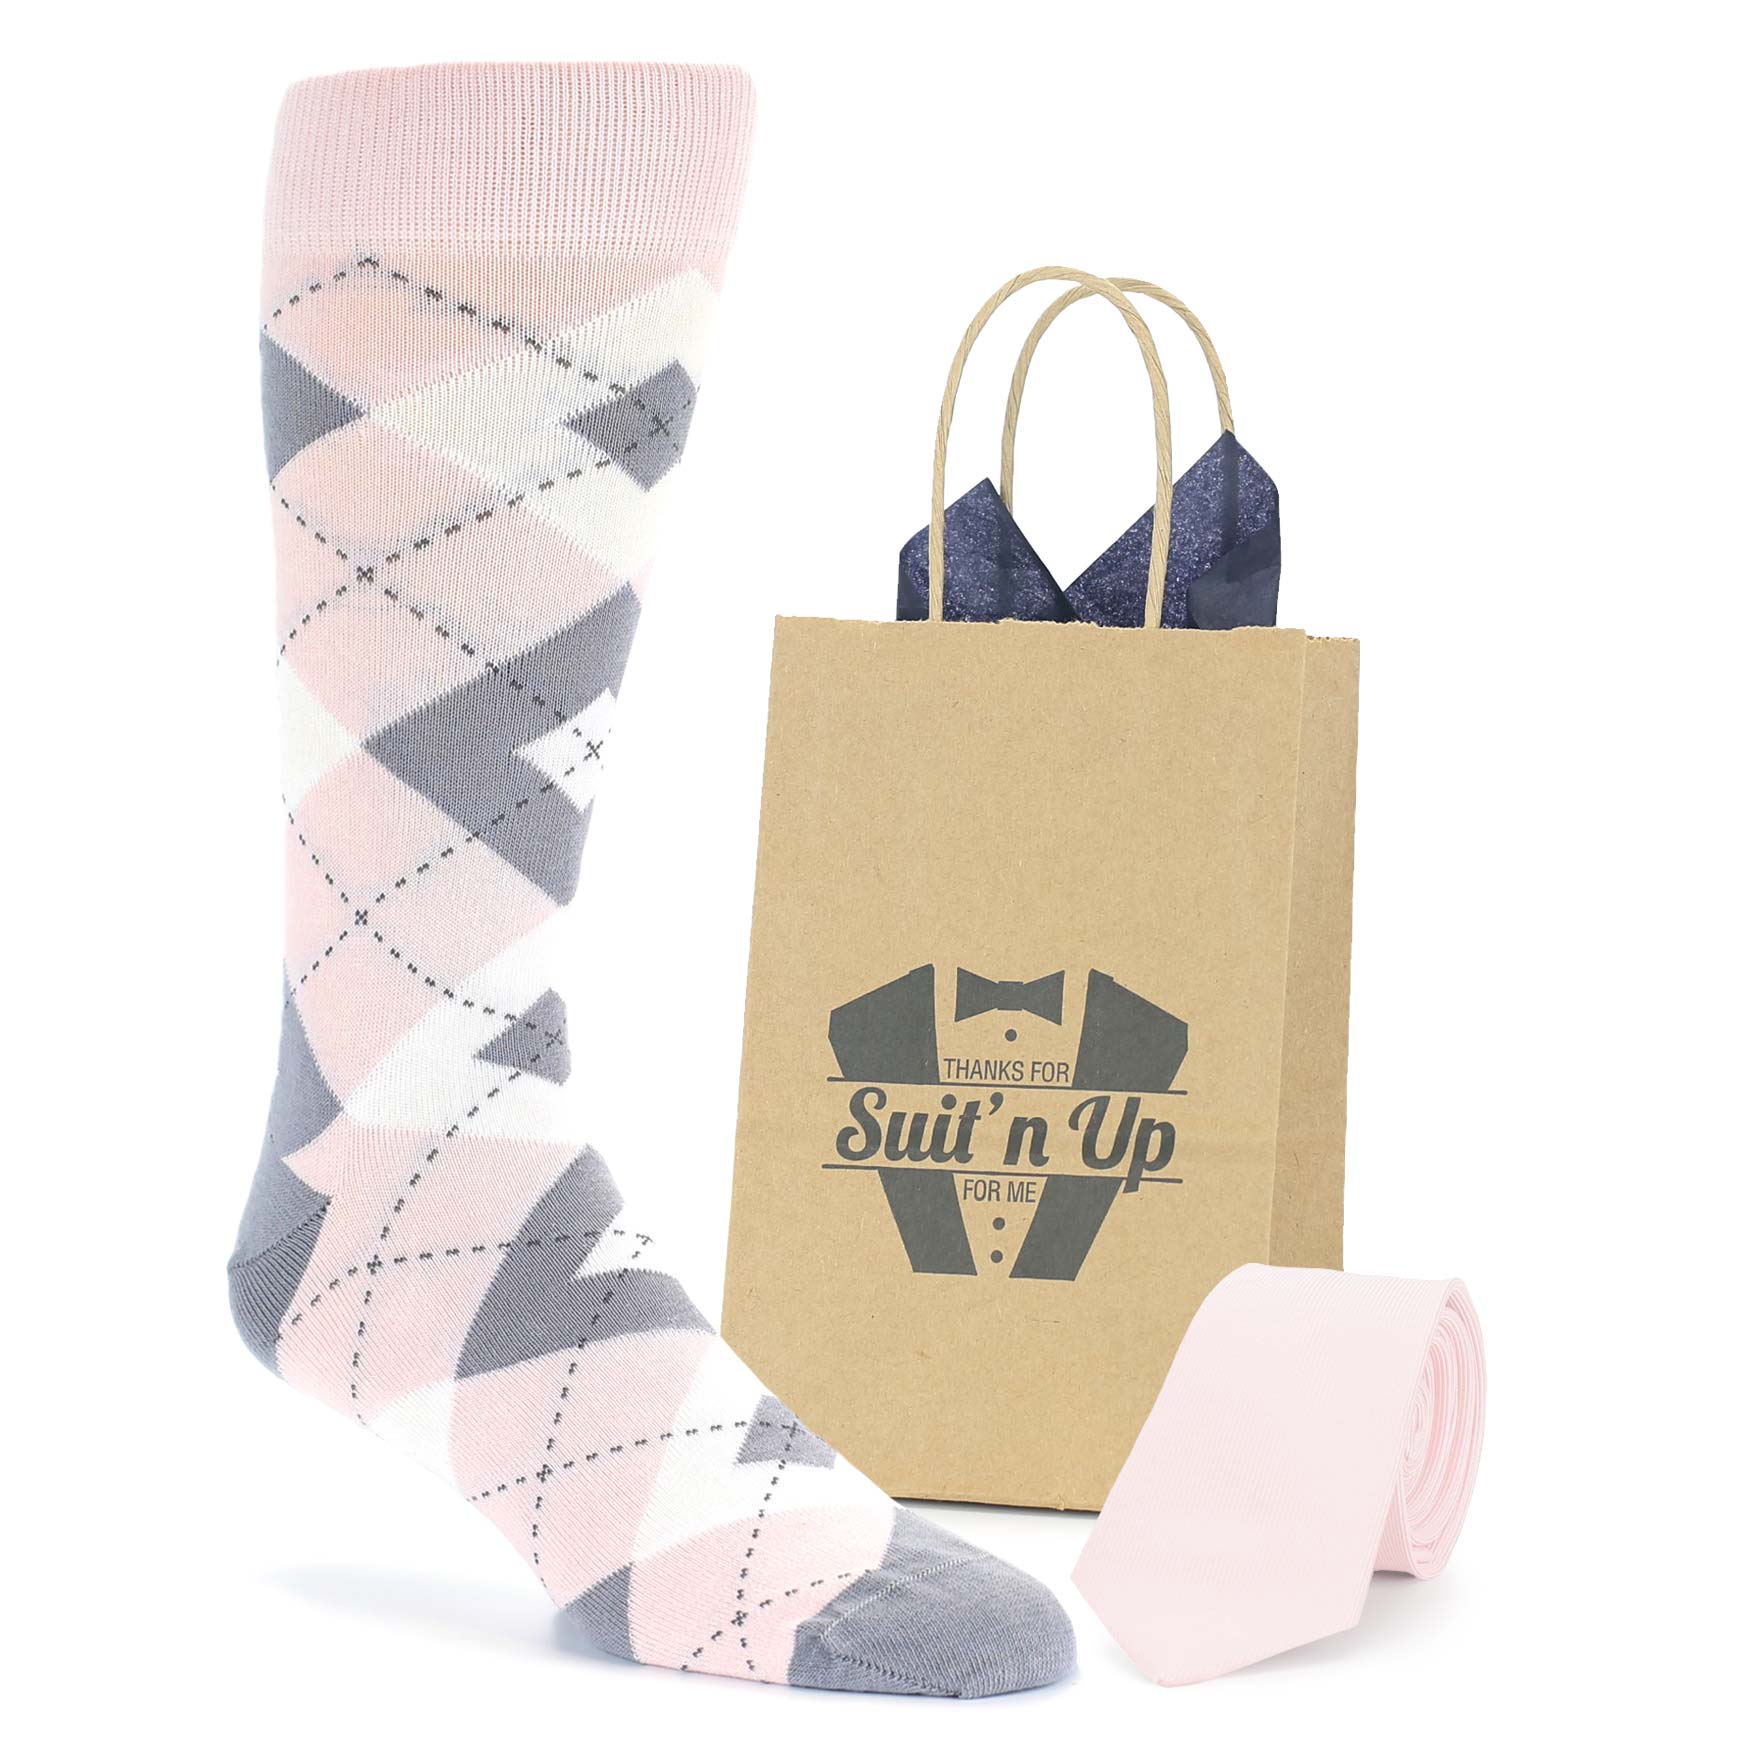 Blush light pink gray argyle wedding socks with tie